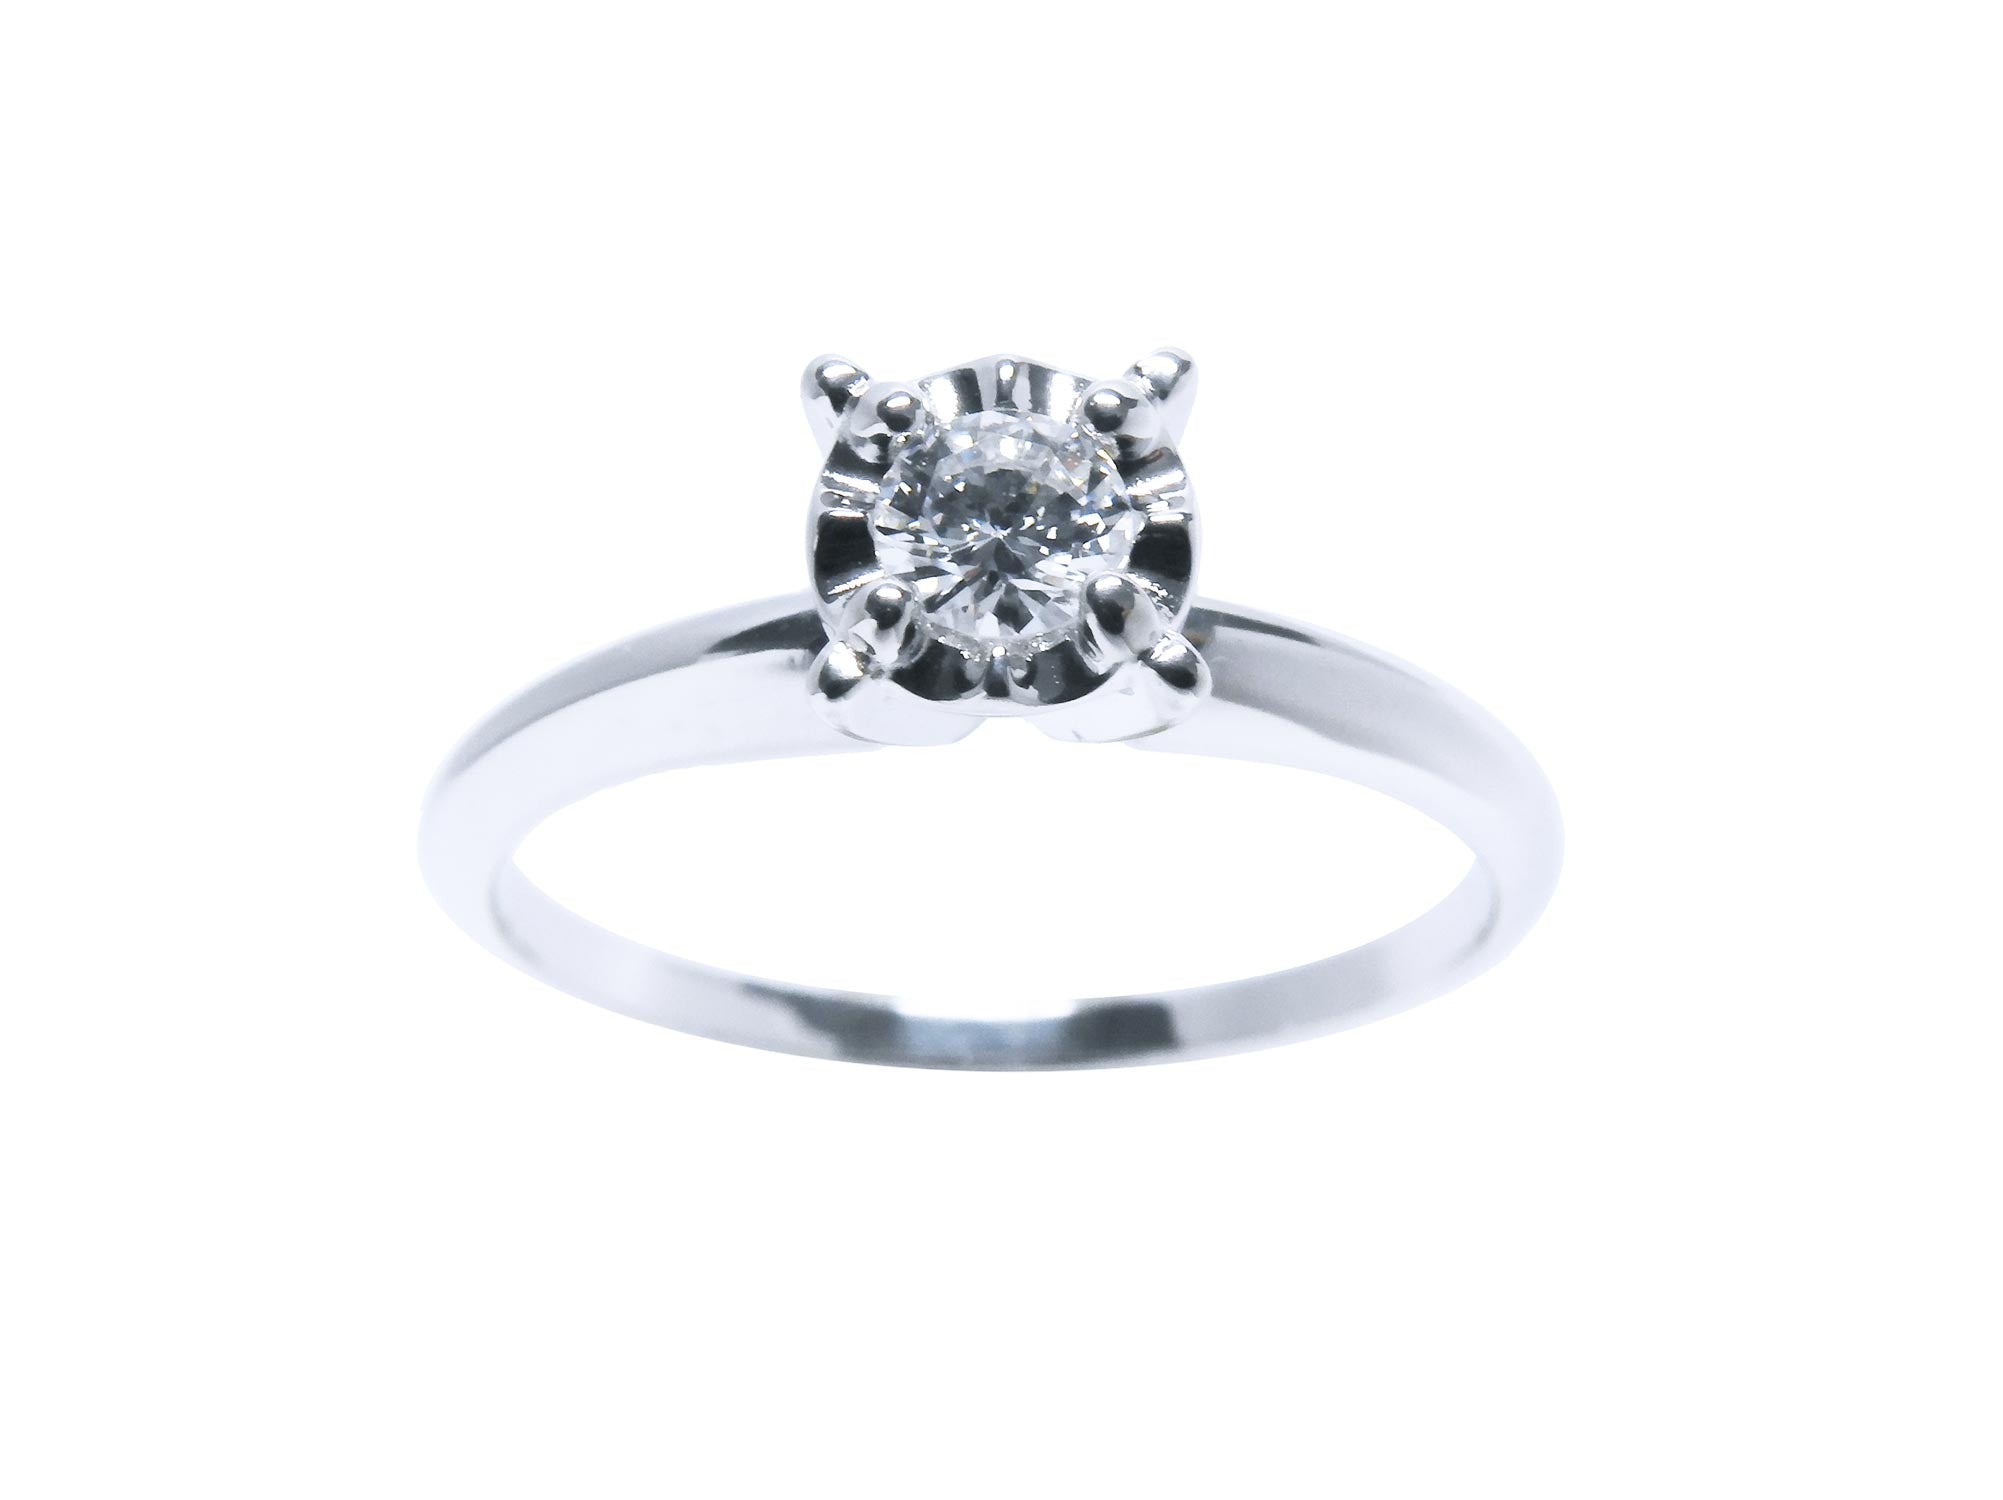 Inexpensive Diamond solitaire ring